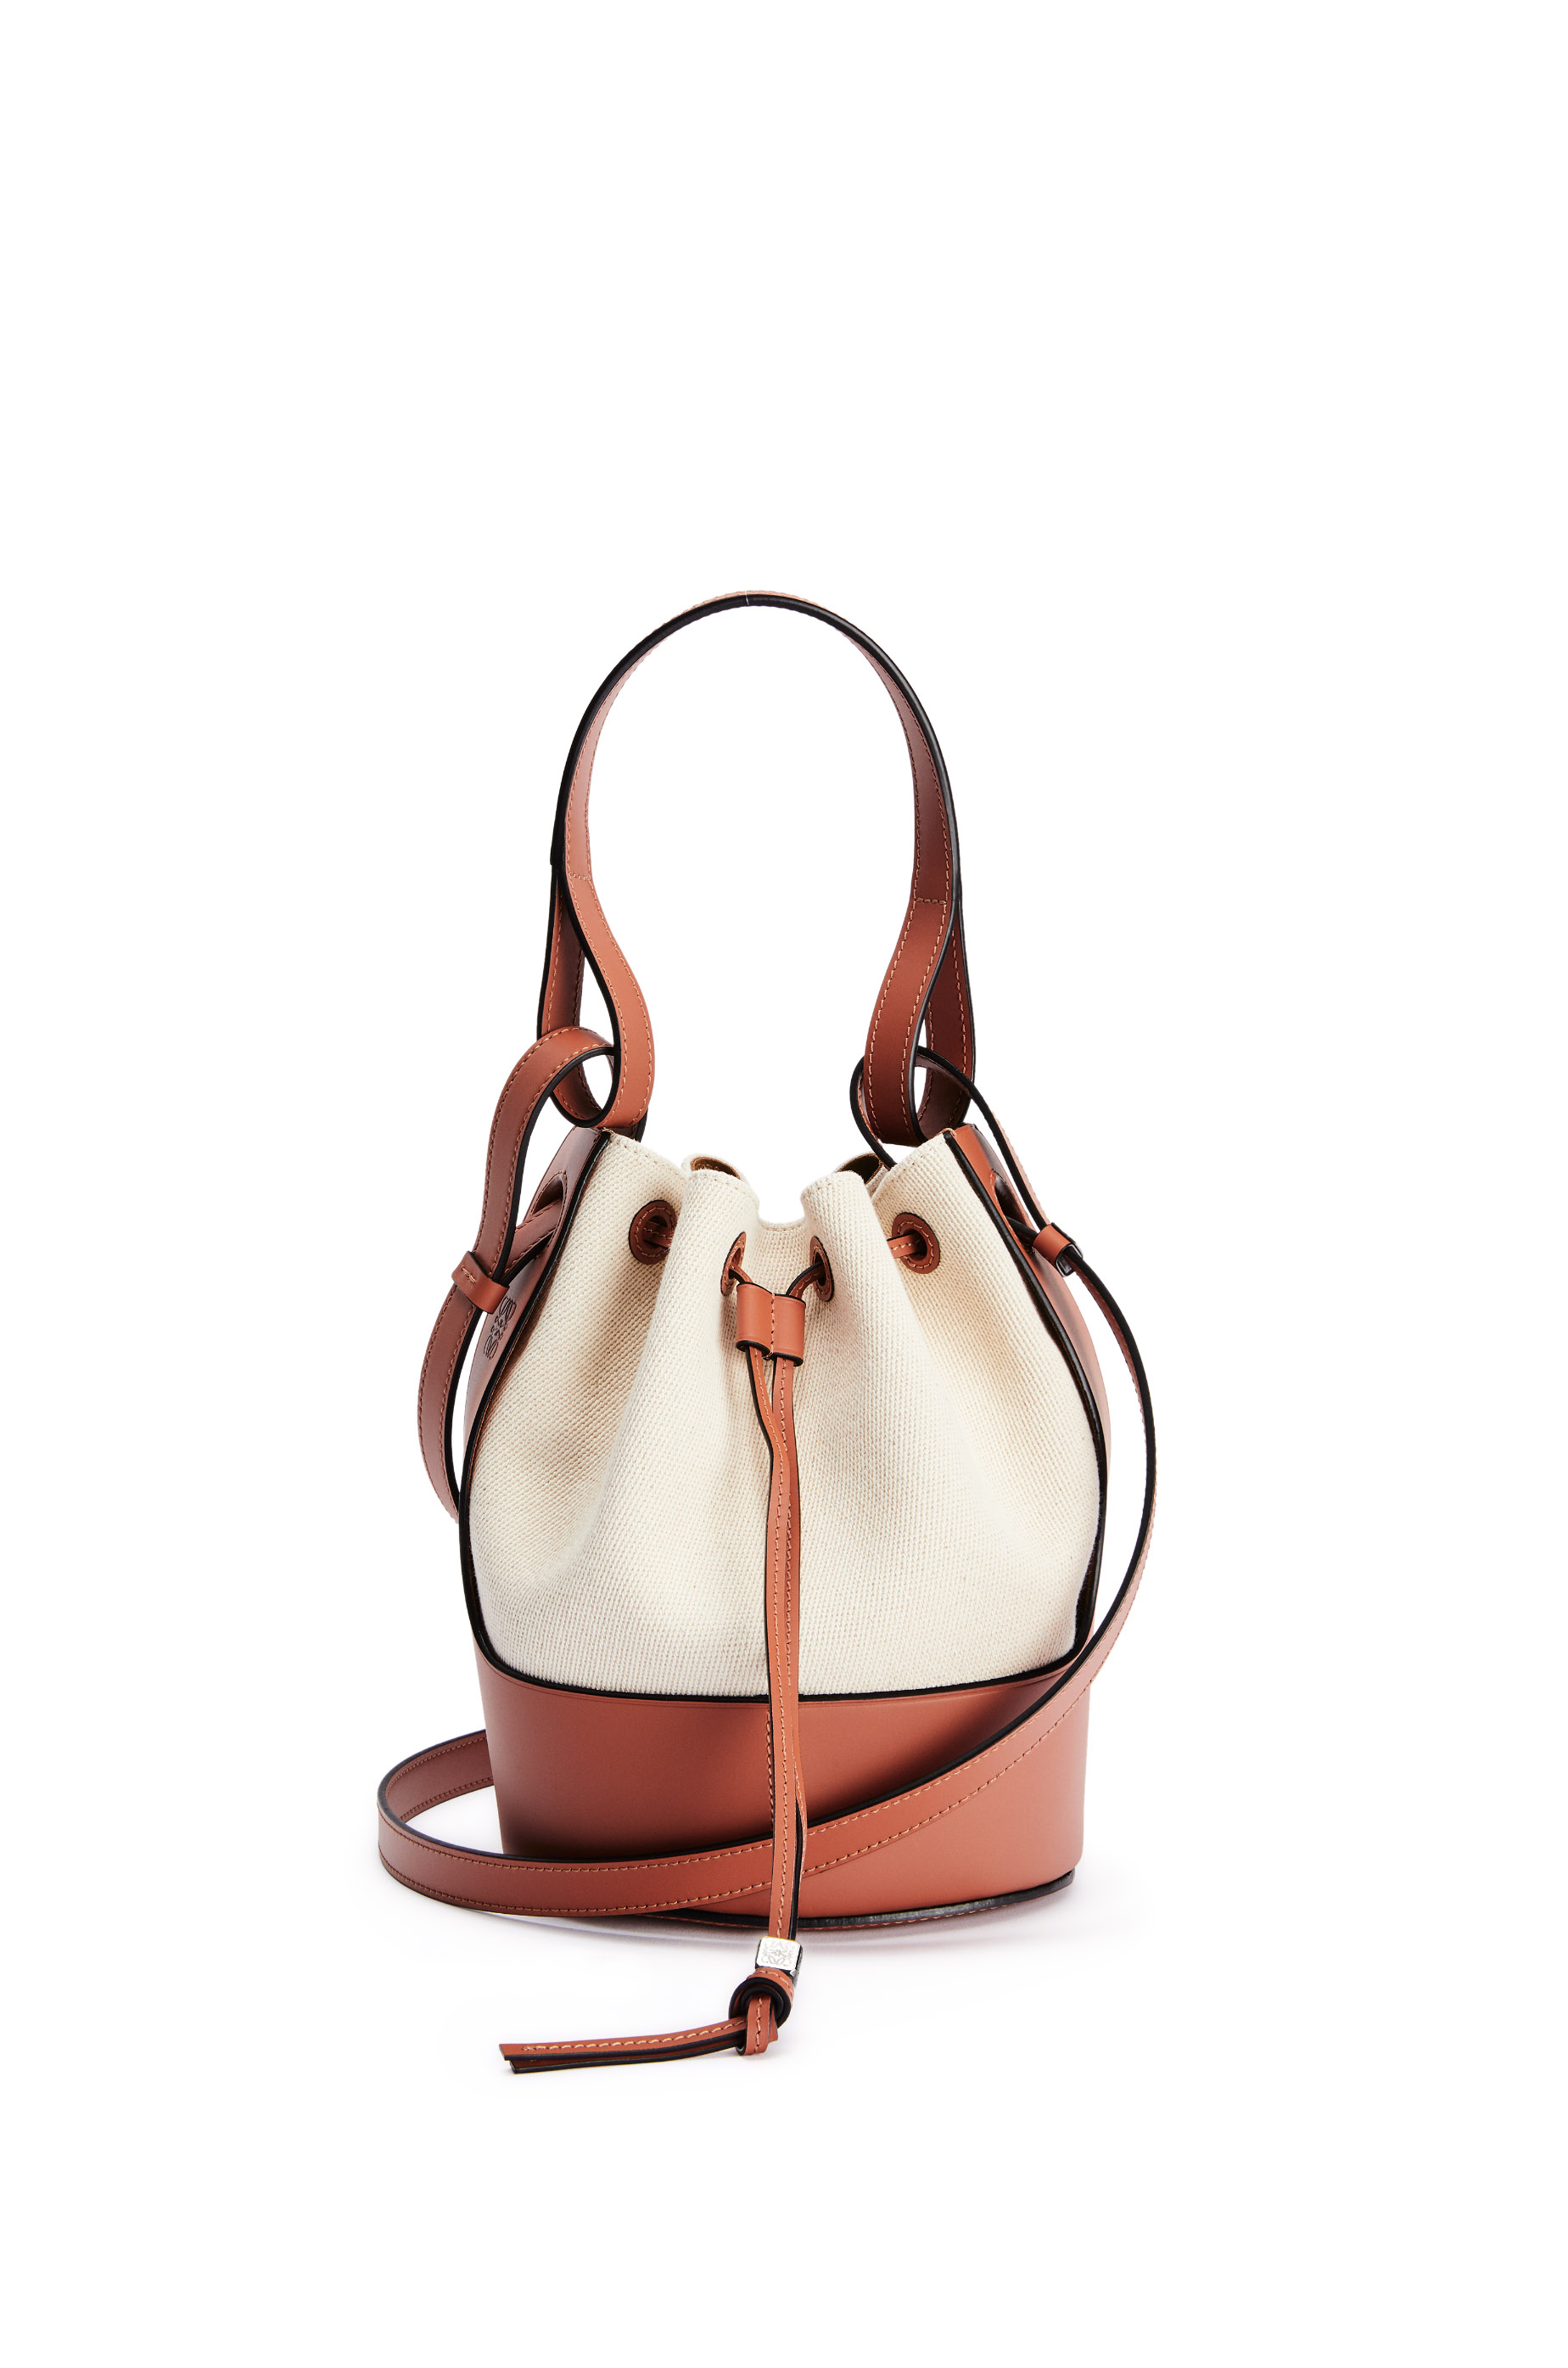 Loewe Bag Discount Sale, UP TO 56% OFF | www.ldeventos.com